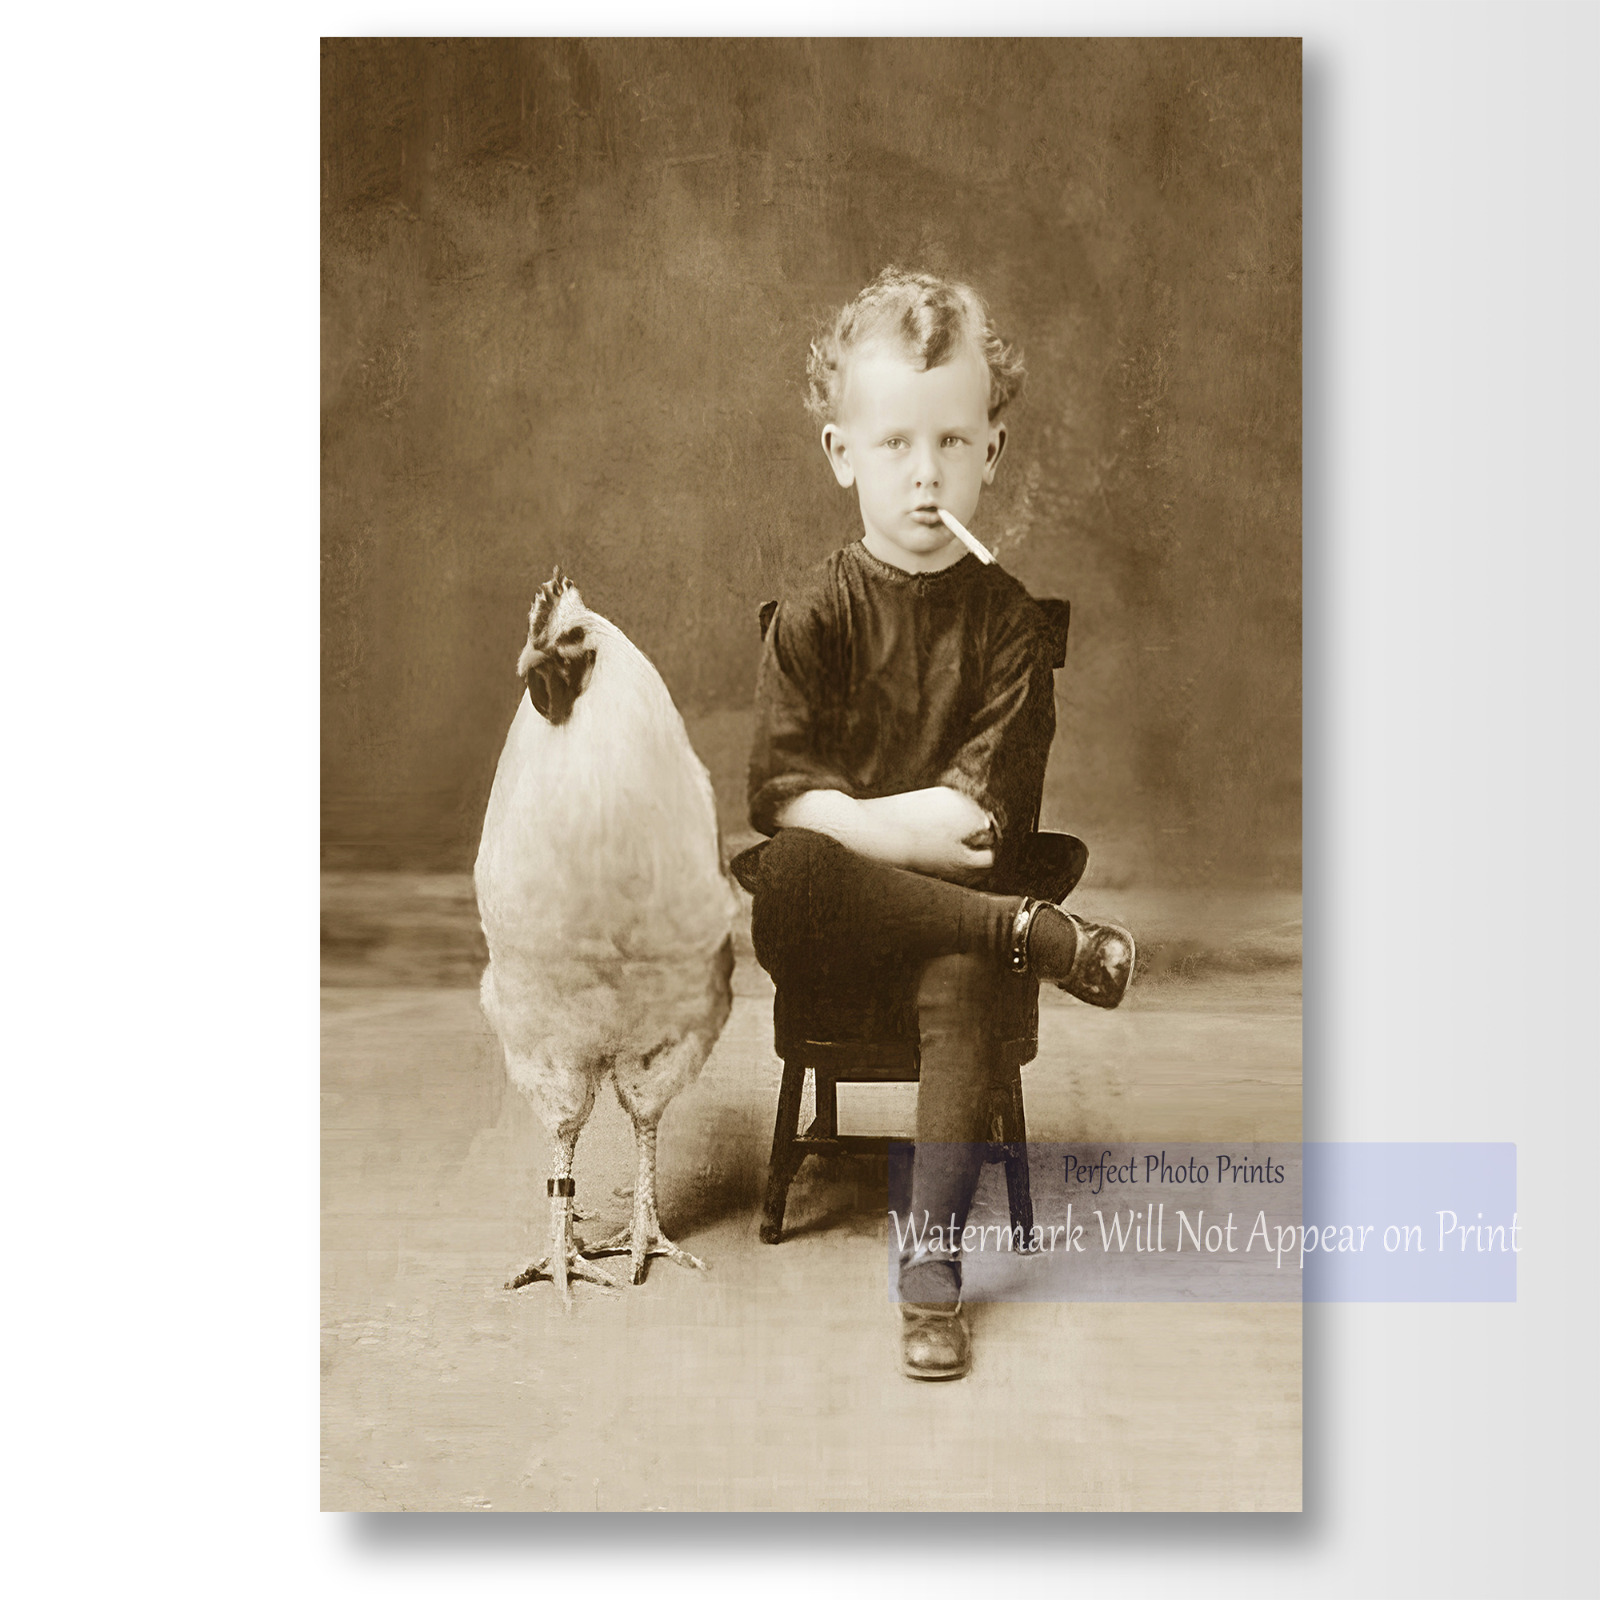 Odd Weird -Vintage Photo Print - Boy Smoking on Chair with Chicken Companion